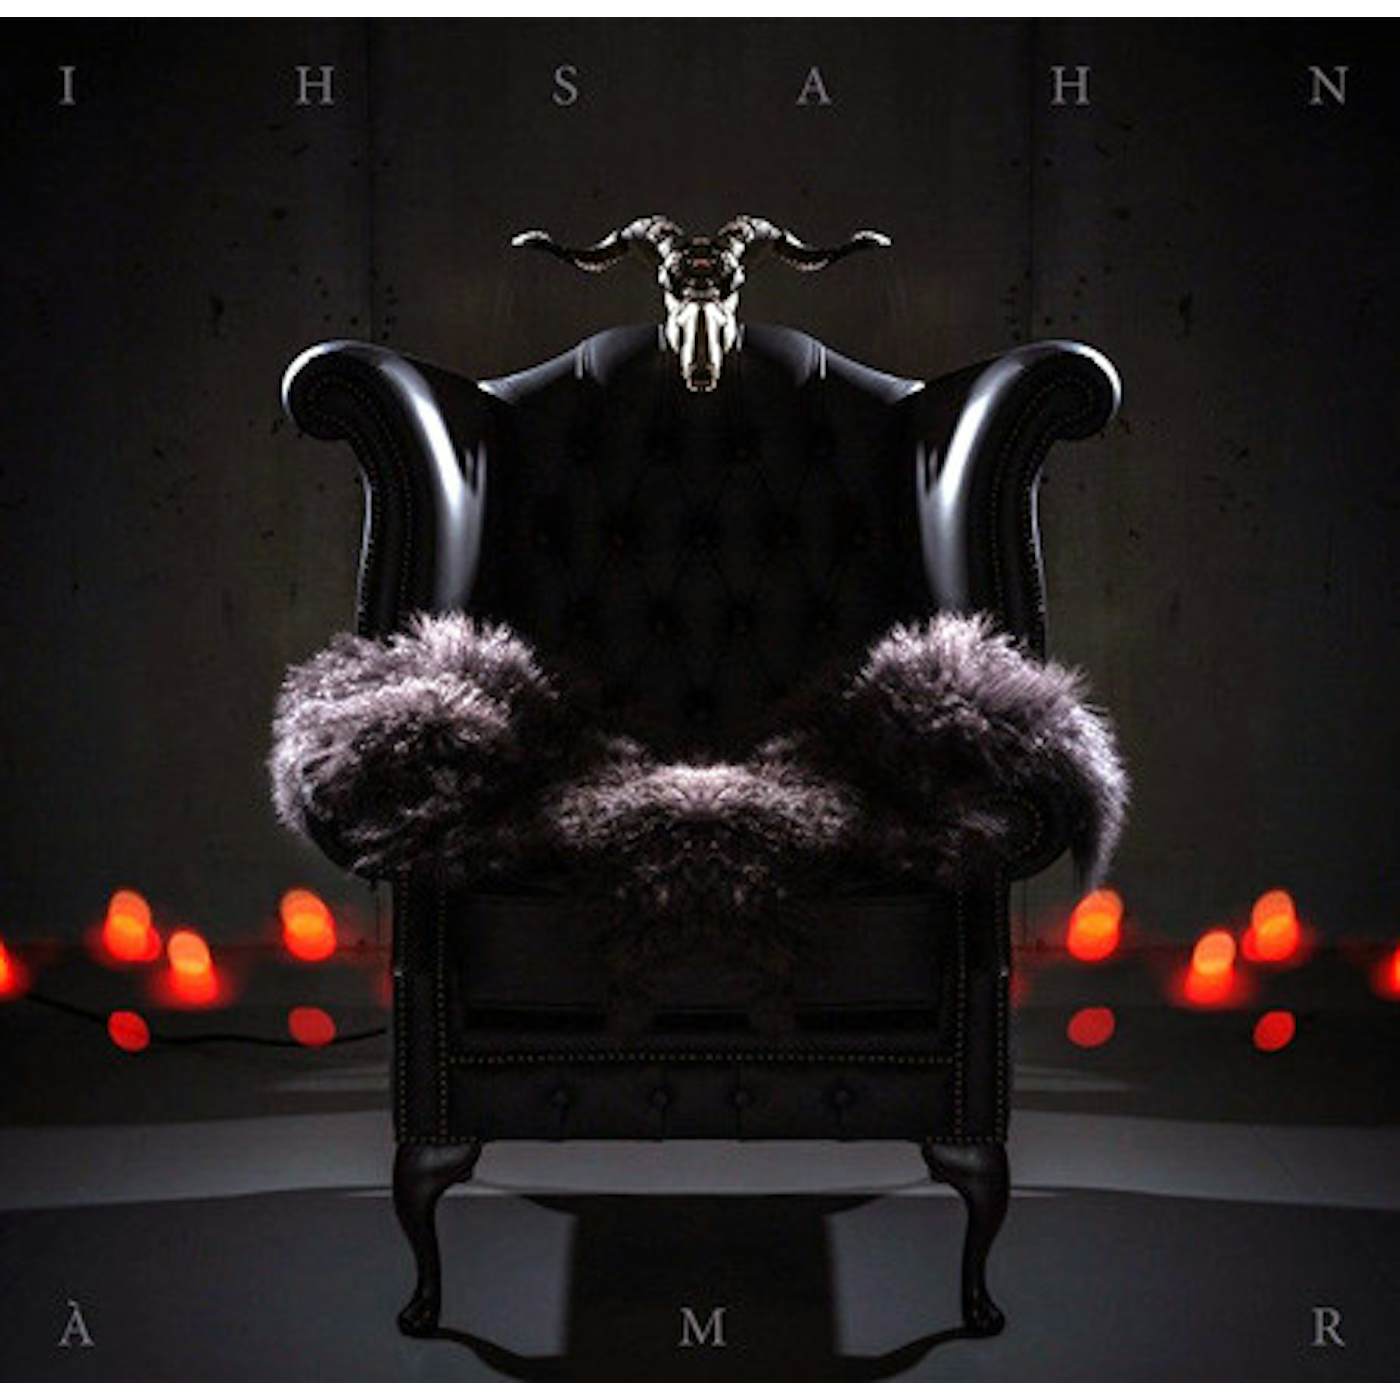 Ihsahn AMR Vinyl Record